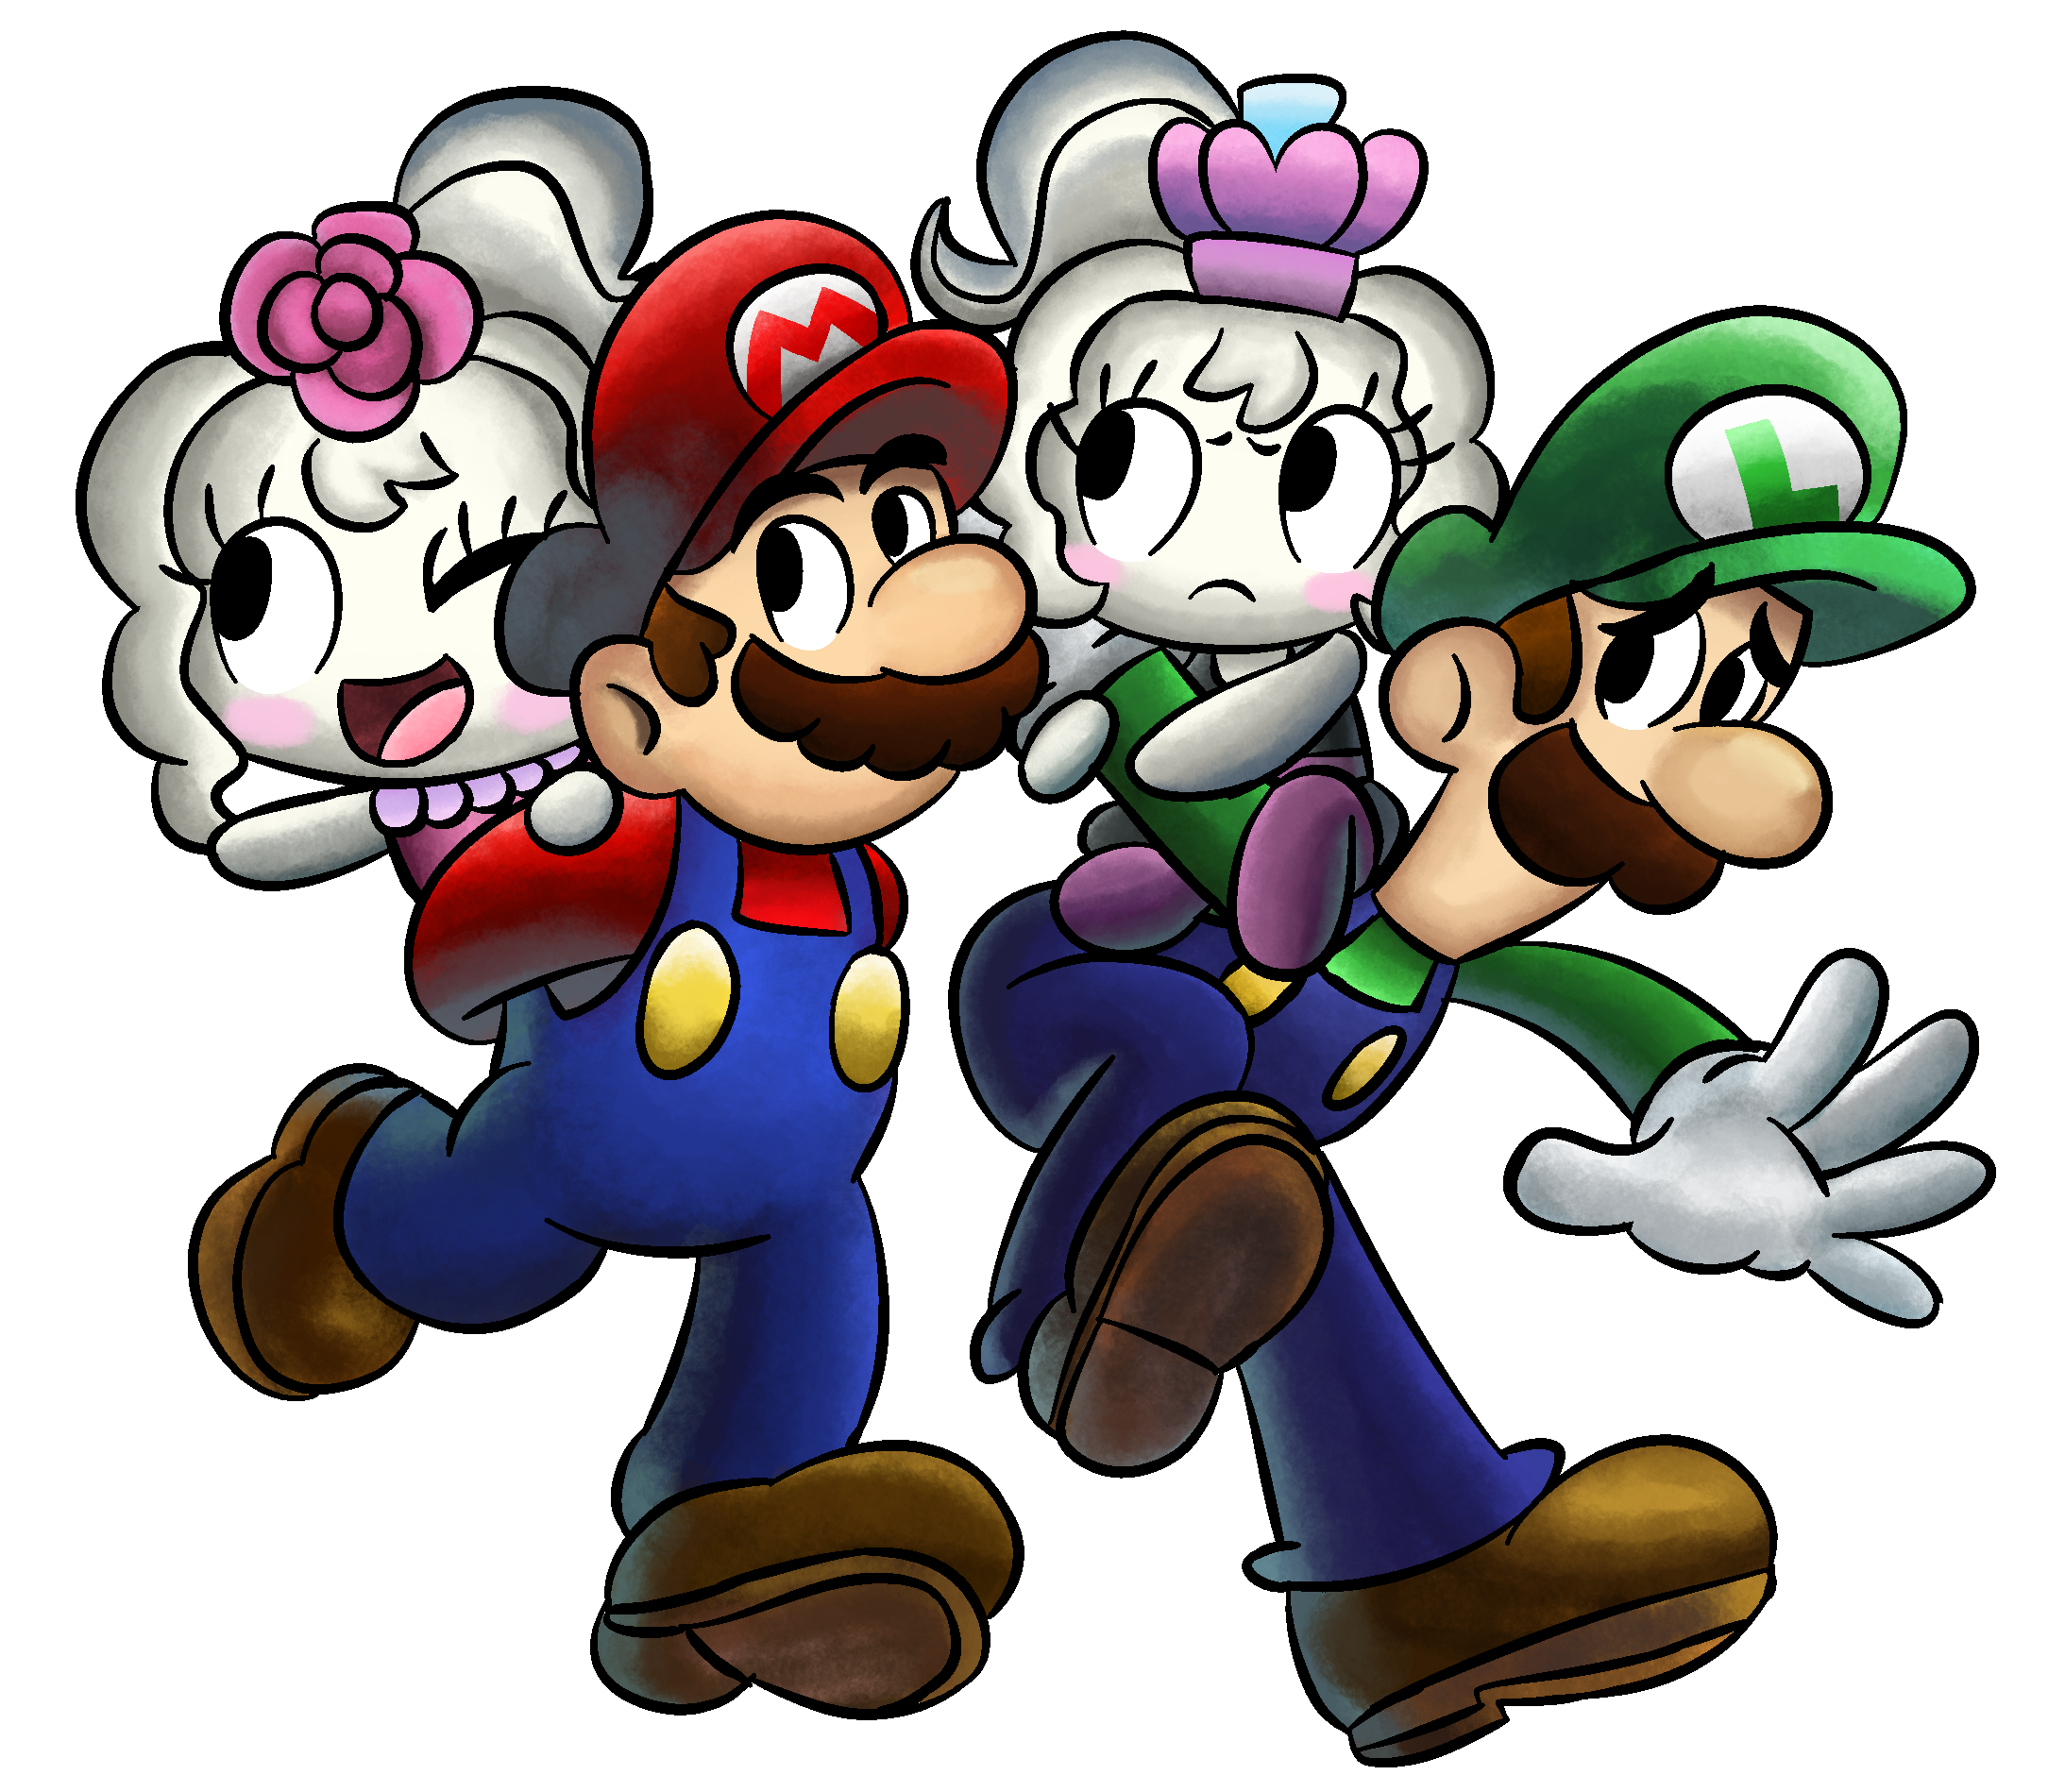 Detail Images Of Mario And Luigi Nomer 34